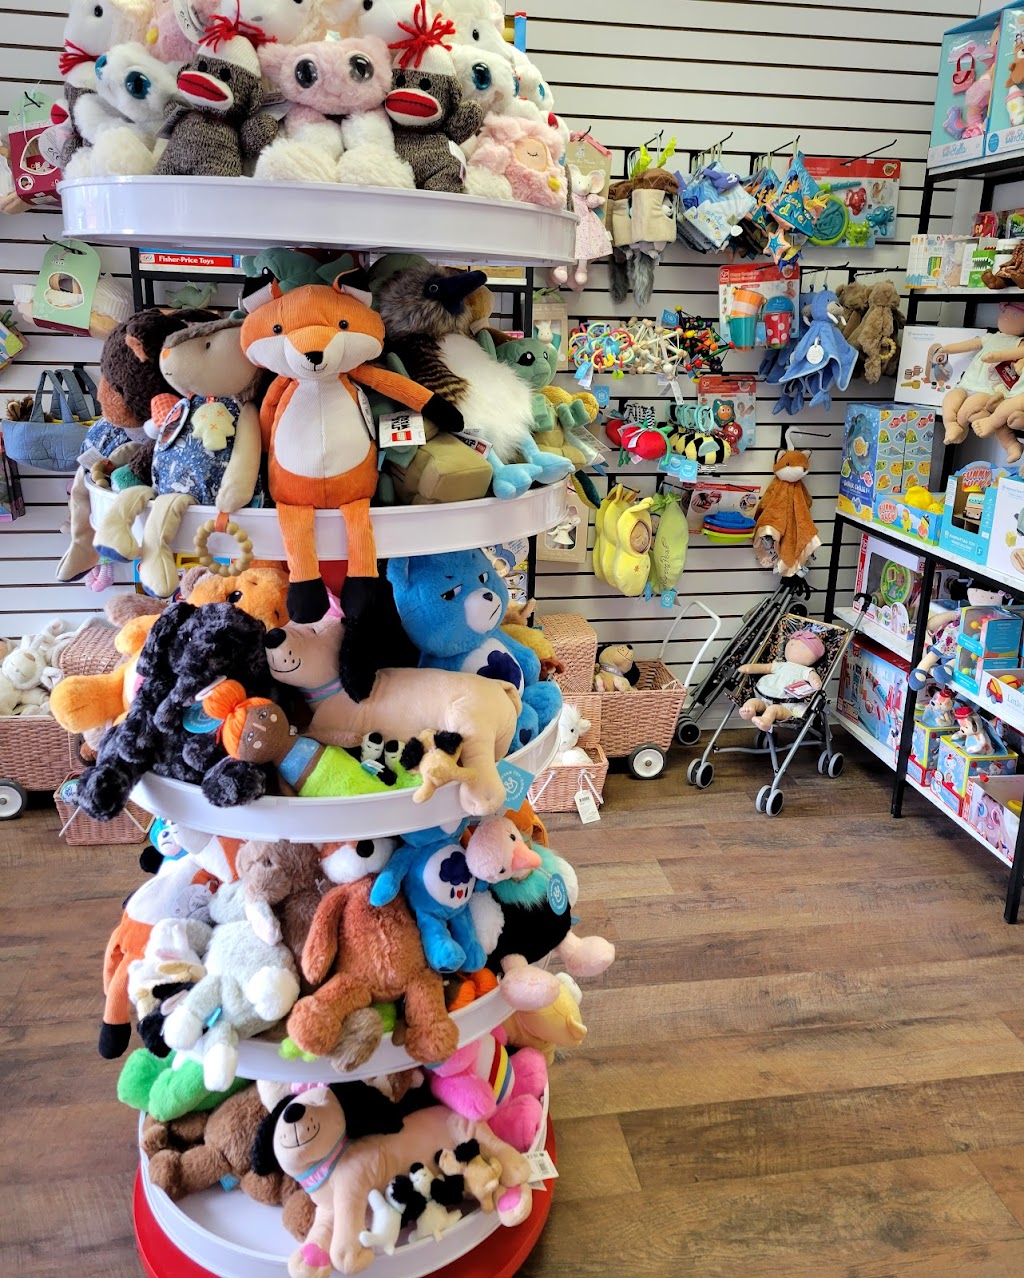 The Lake Kids Store | 97 S Shore Rd, Lake Cowichan, BC V0R 2G0, Canada | Phone: (250) 217-4333